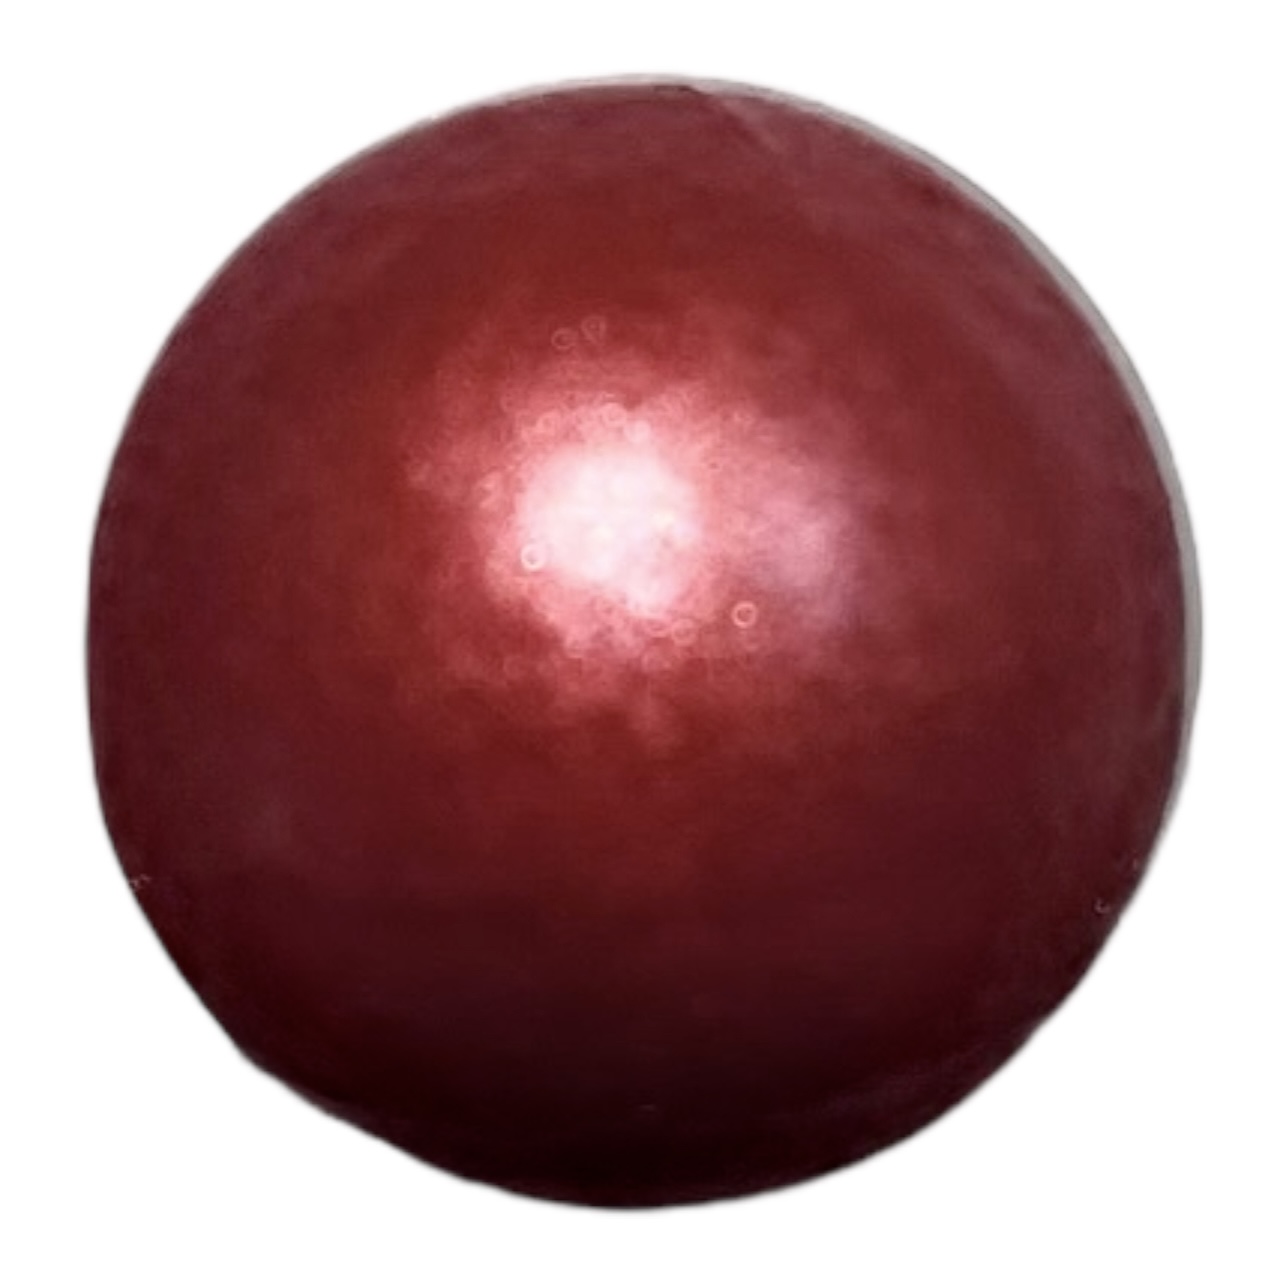 Choco Deco - Ball - Rubi Rot Klein - 66 Stück (20 x 20 mm) - Shantys